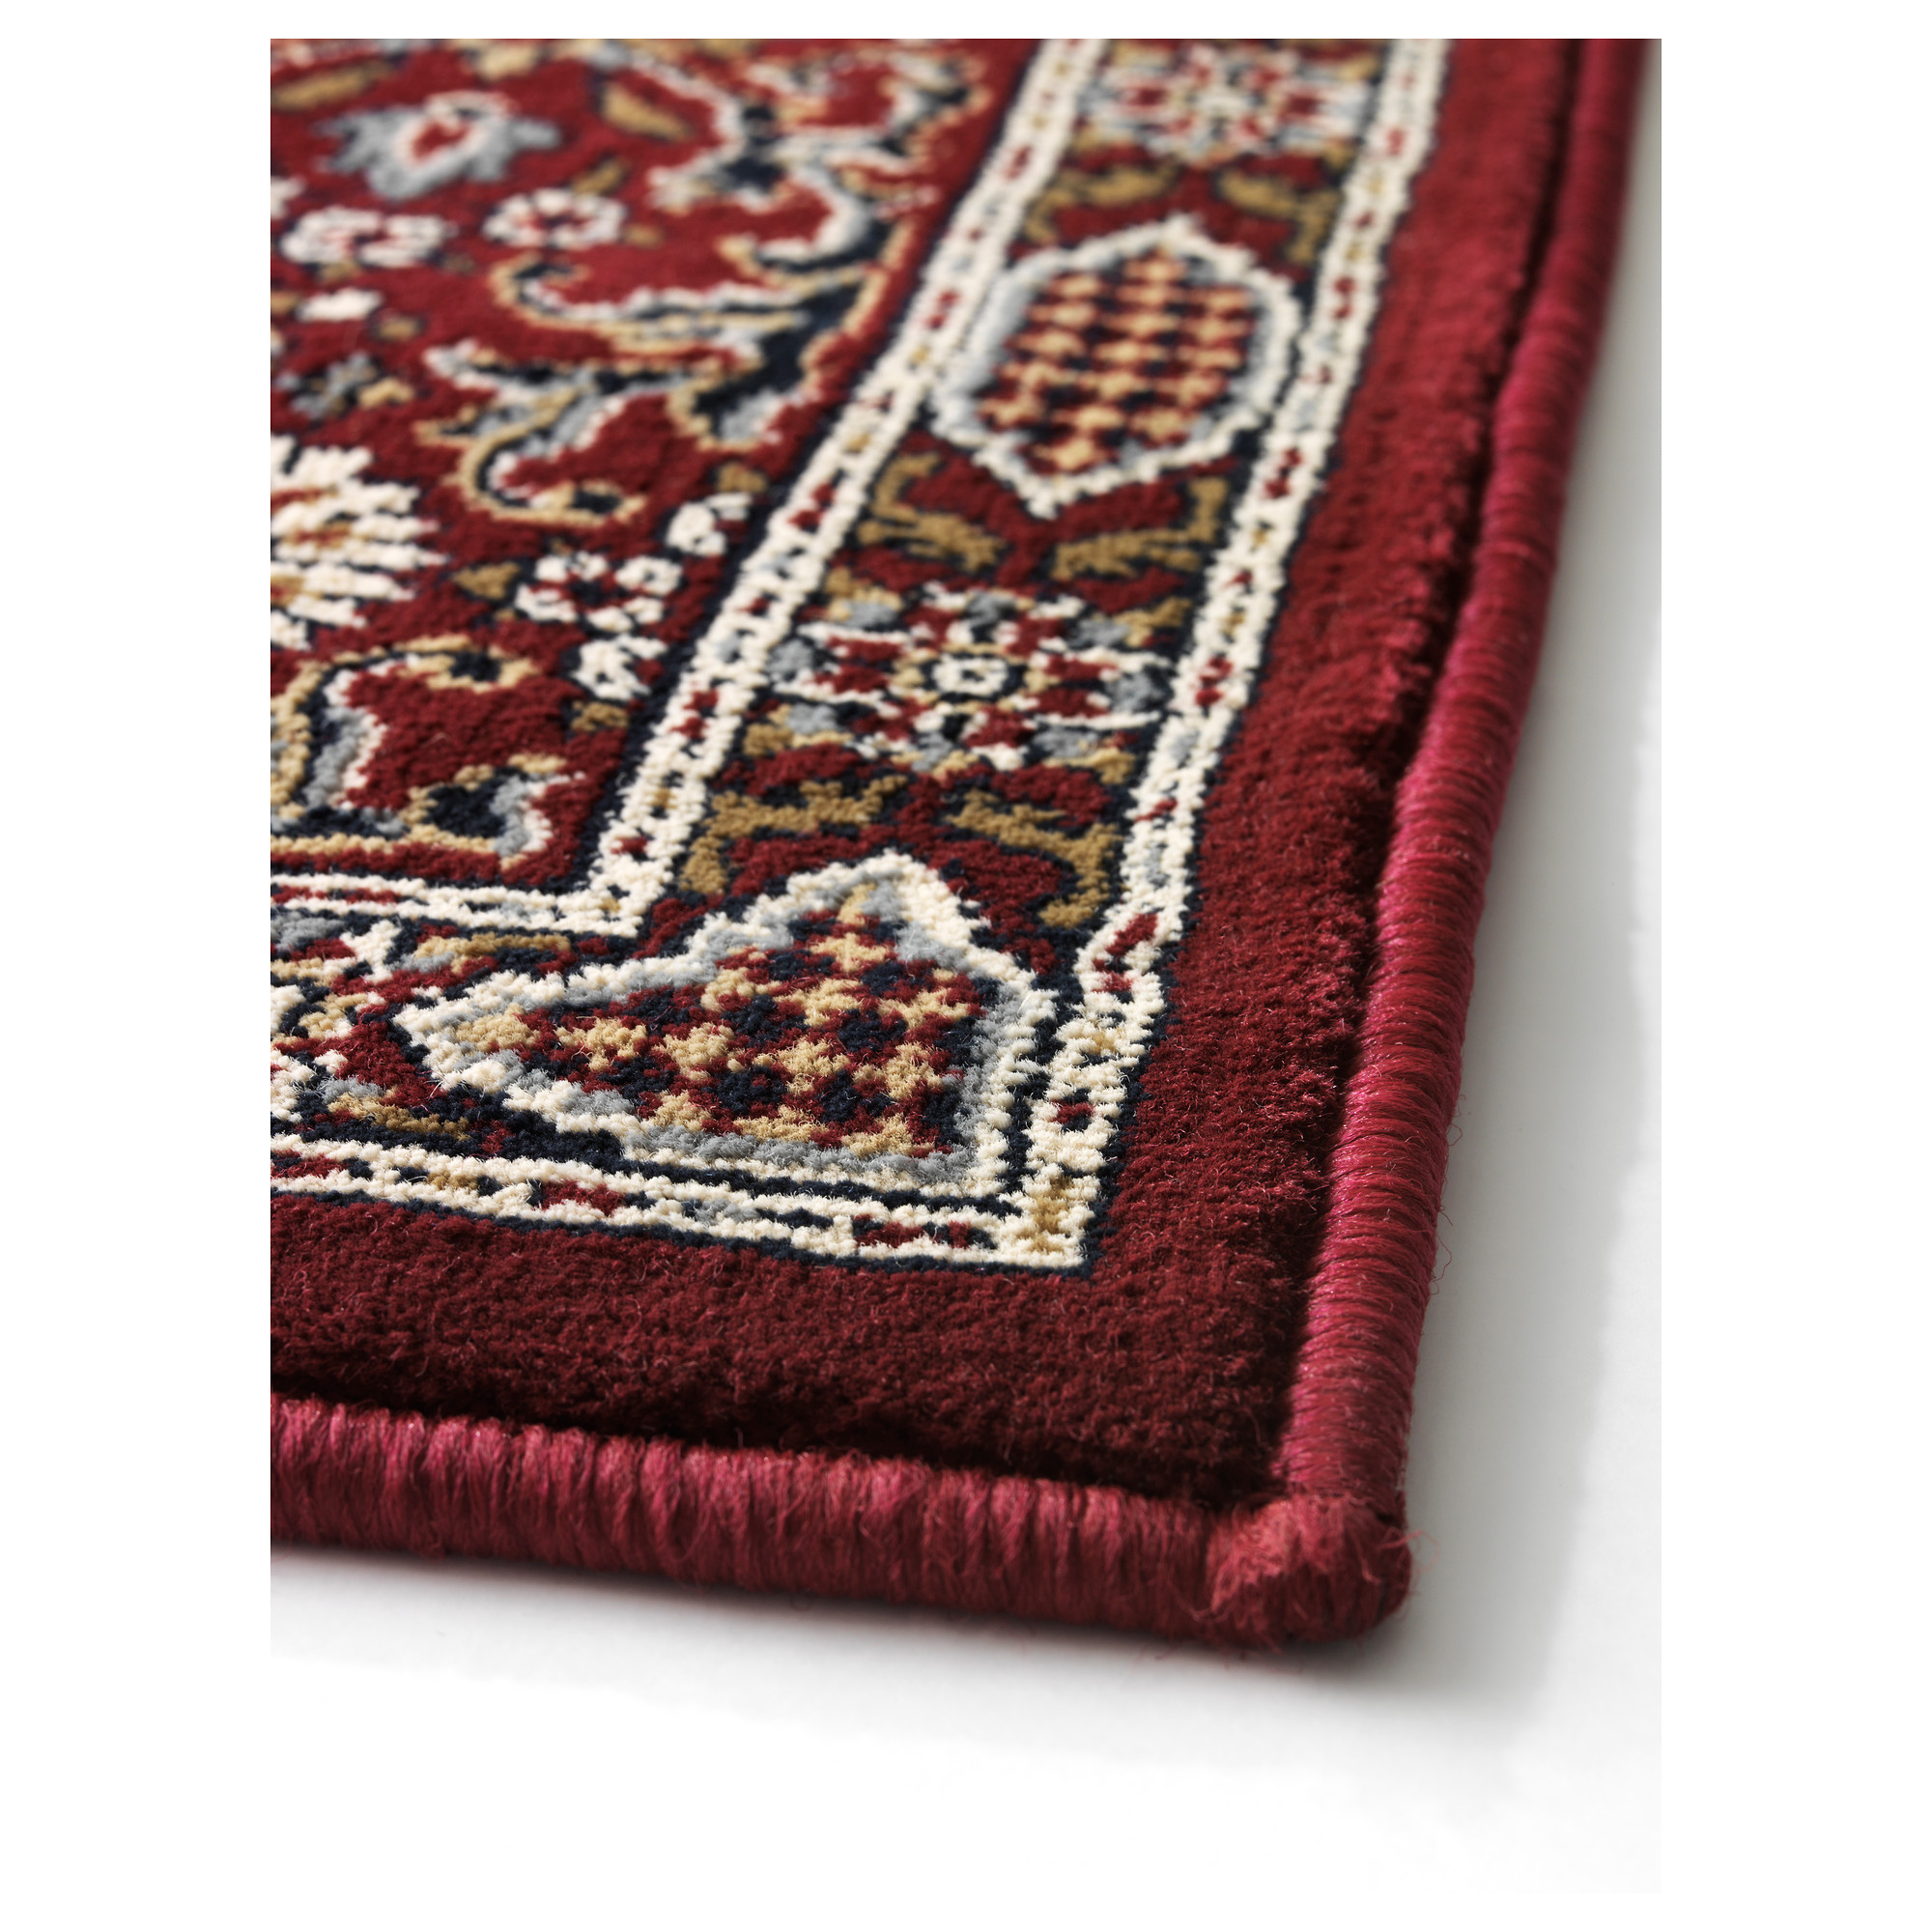 A closeup of a burgundy IKEA Valby Ruta rug.